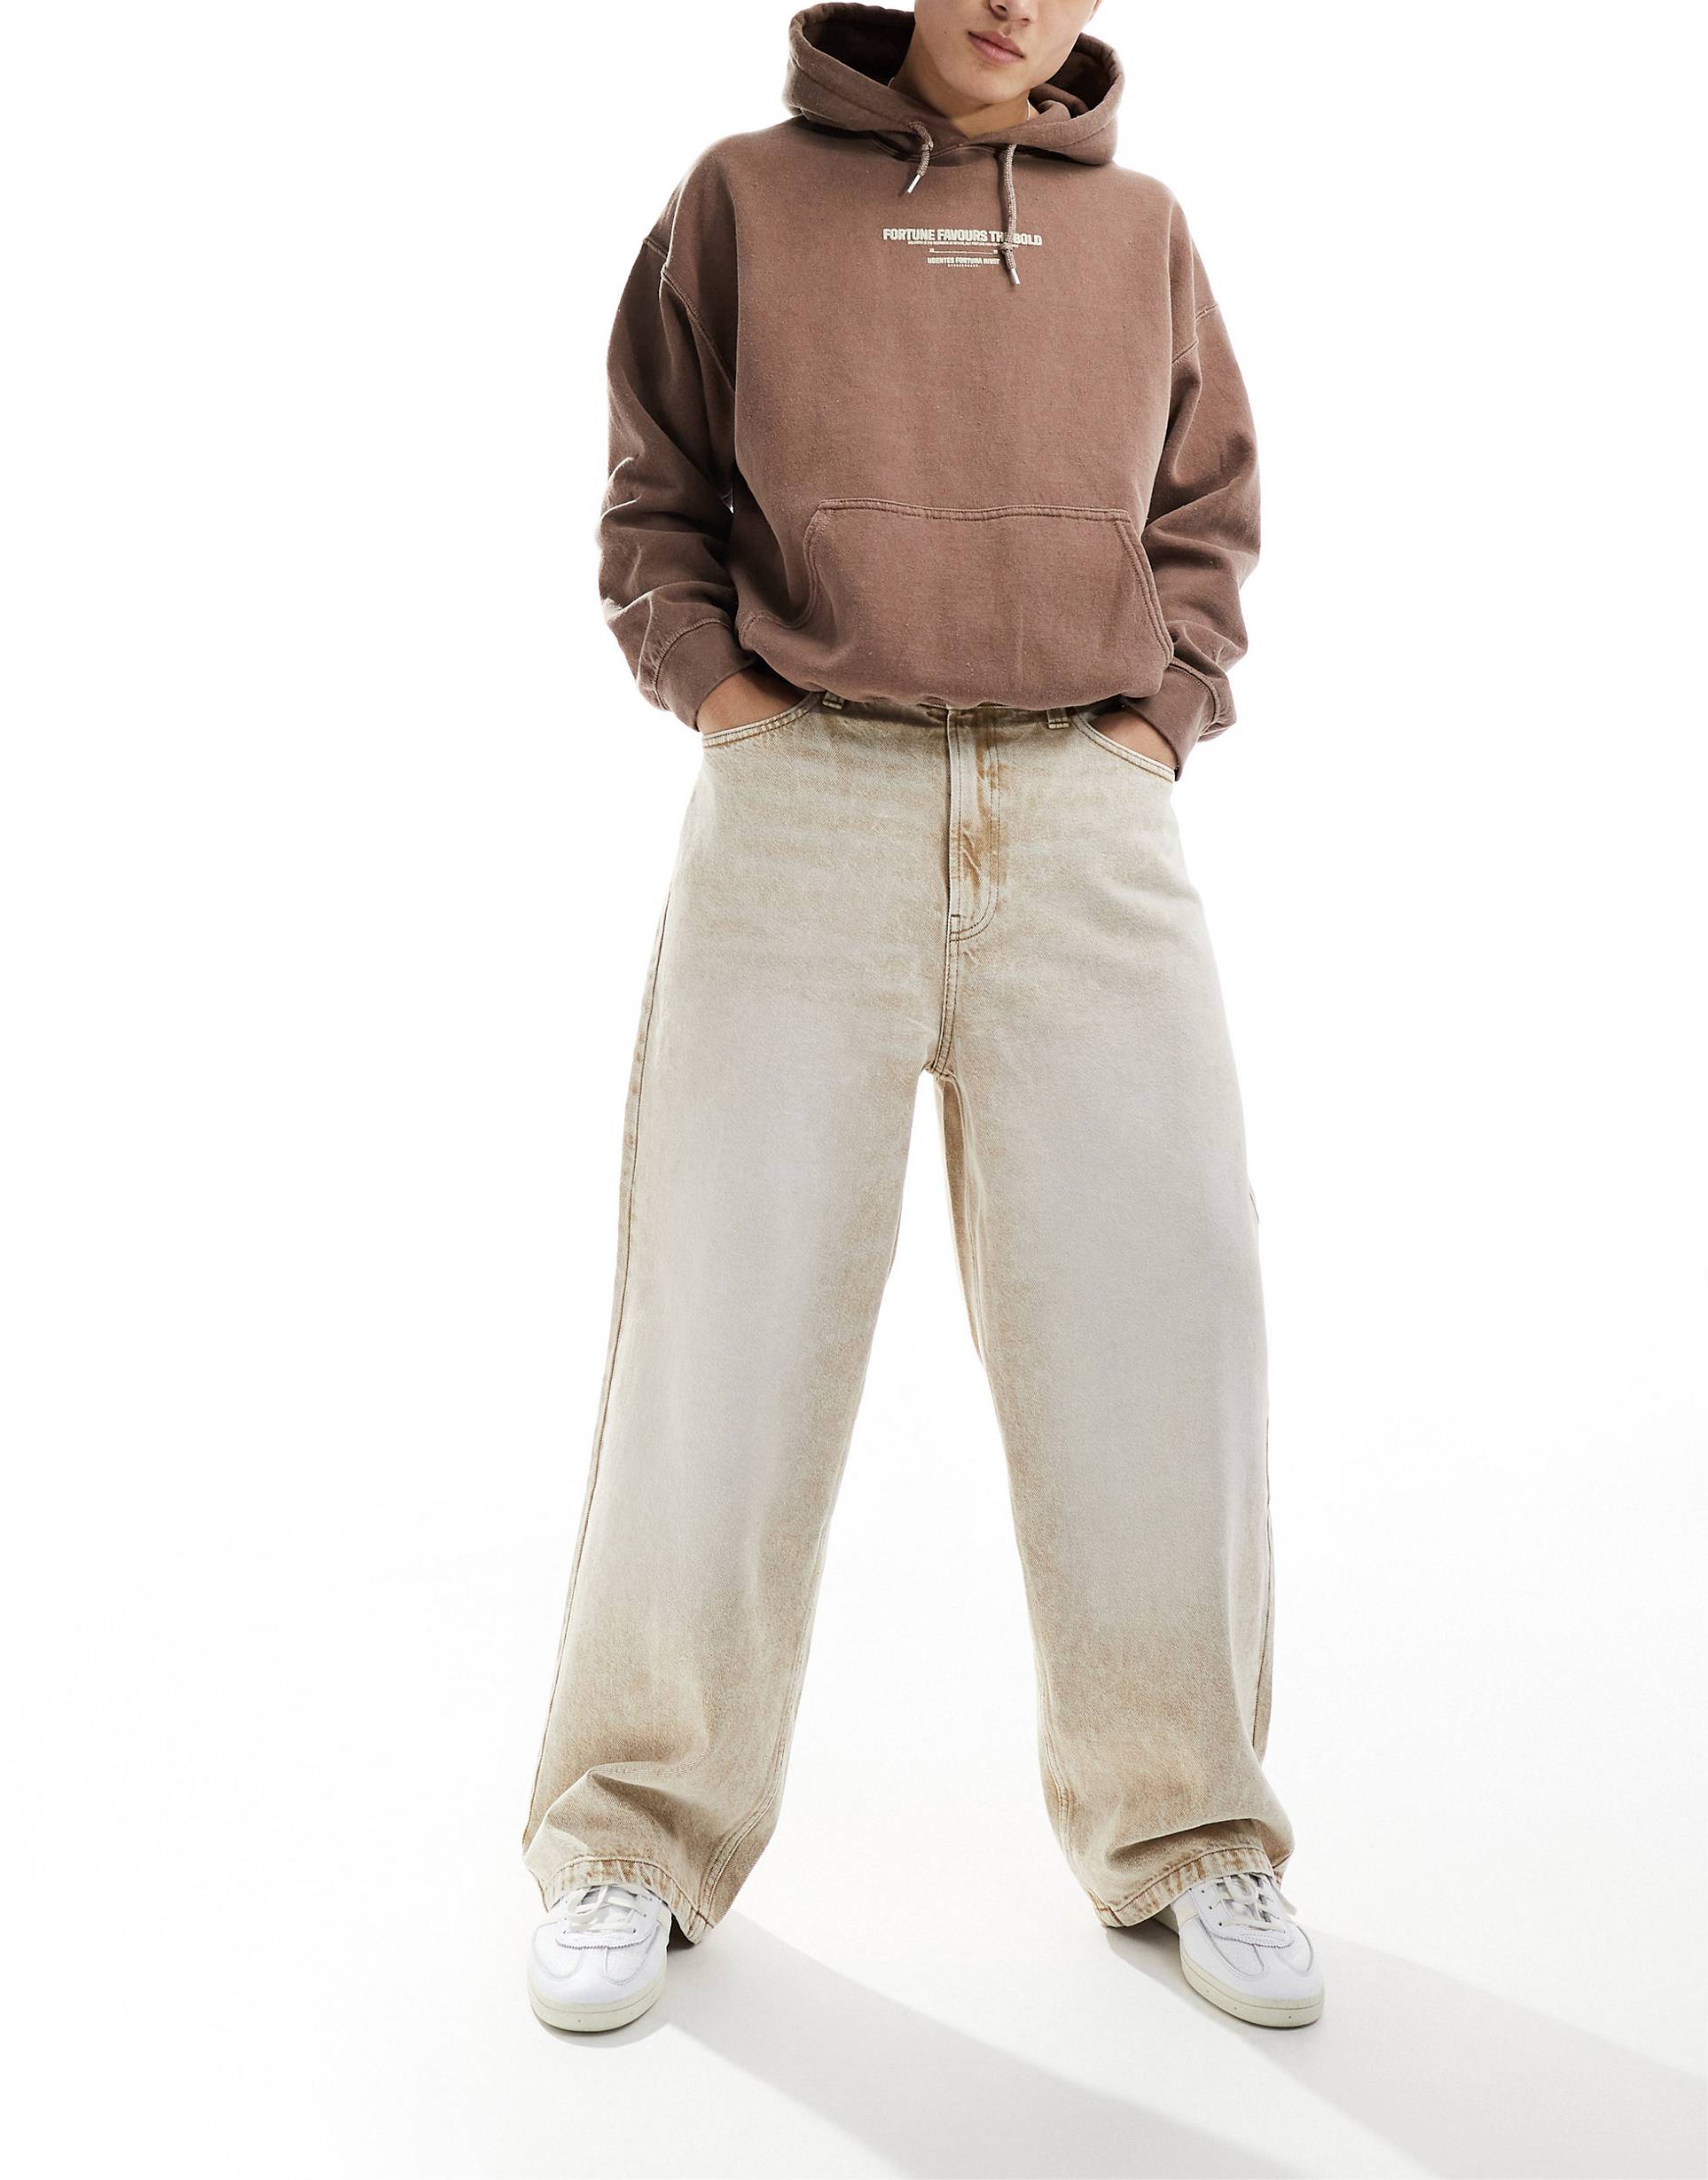 Джинсы Bershka Skater Fit Casted, бежевый джинсы bershka зауженные 42 размер